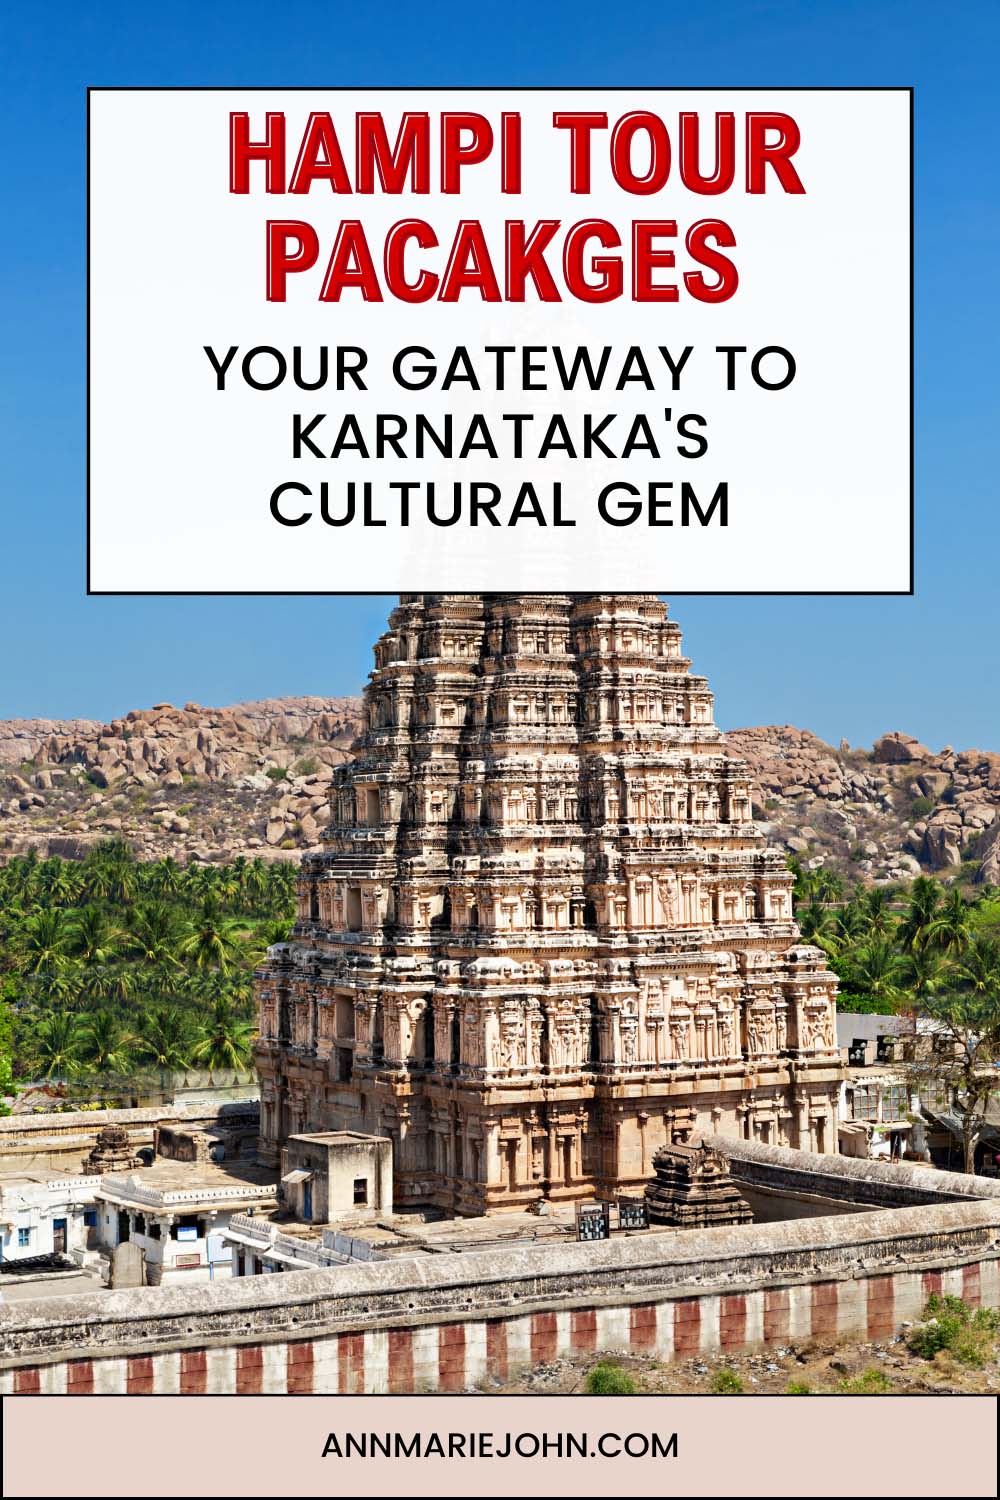 Hampi Tour Packages: Your Gateway to Karnataka's Cultural Gem